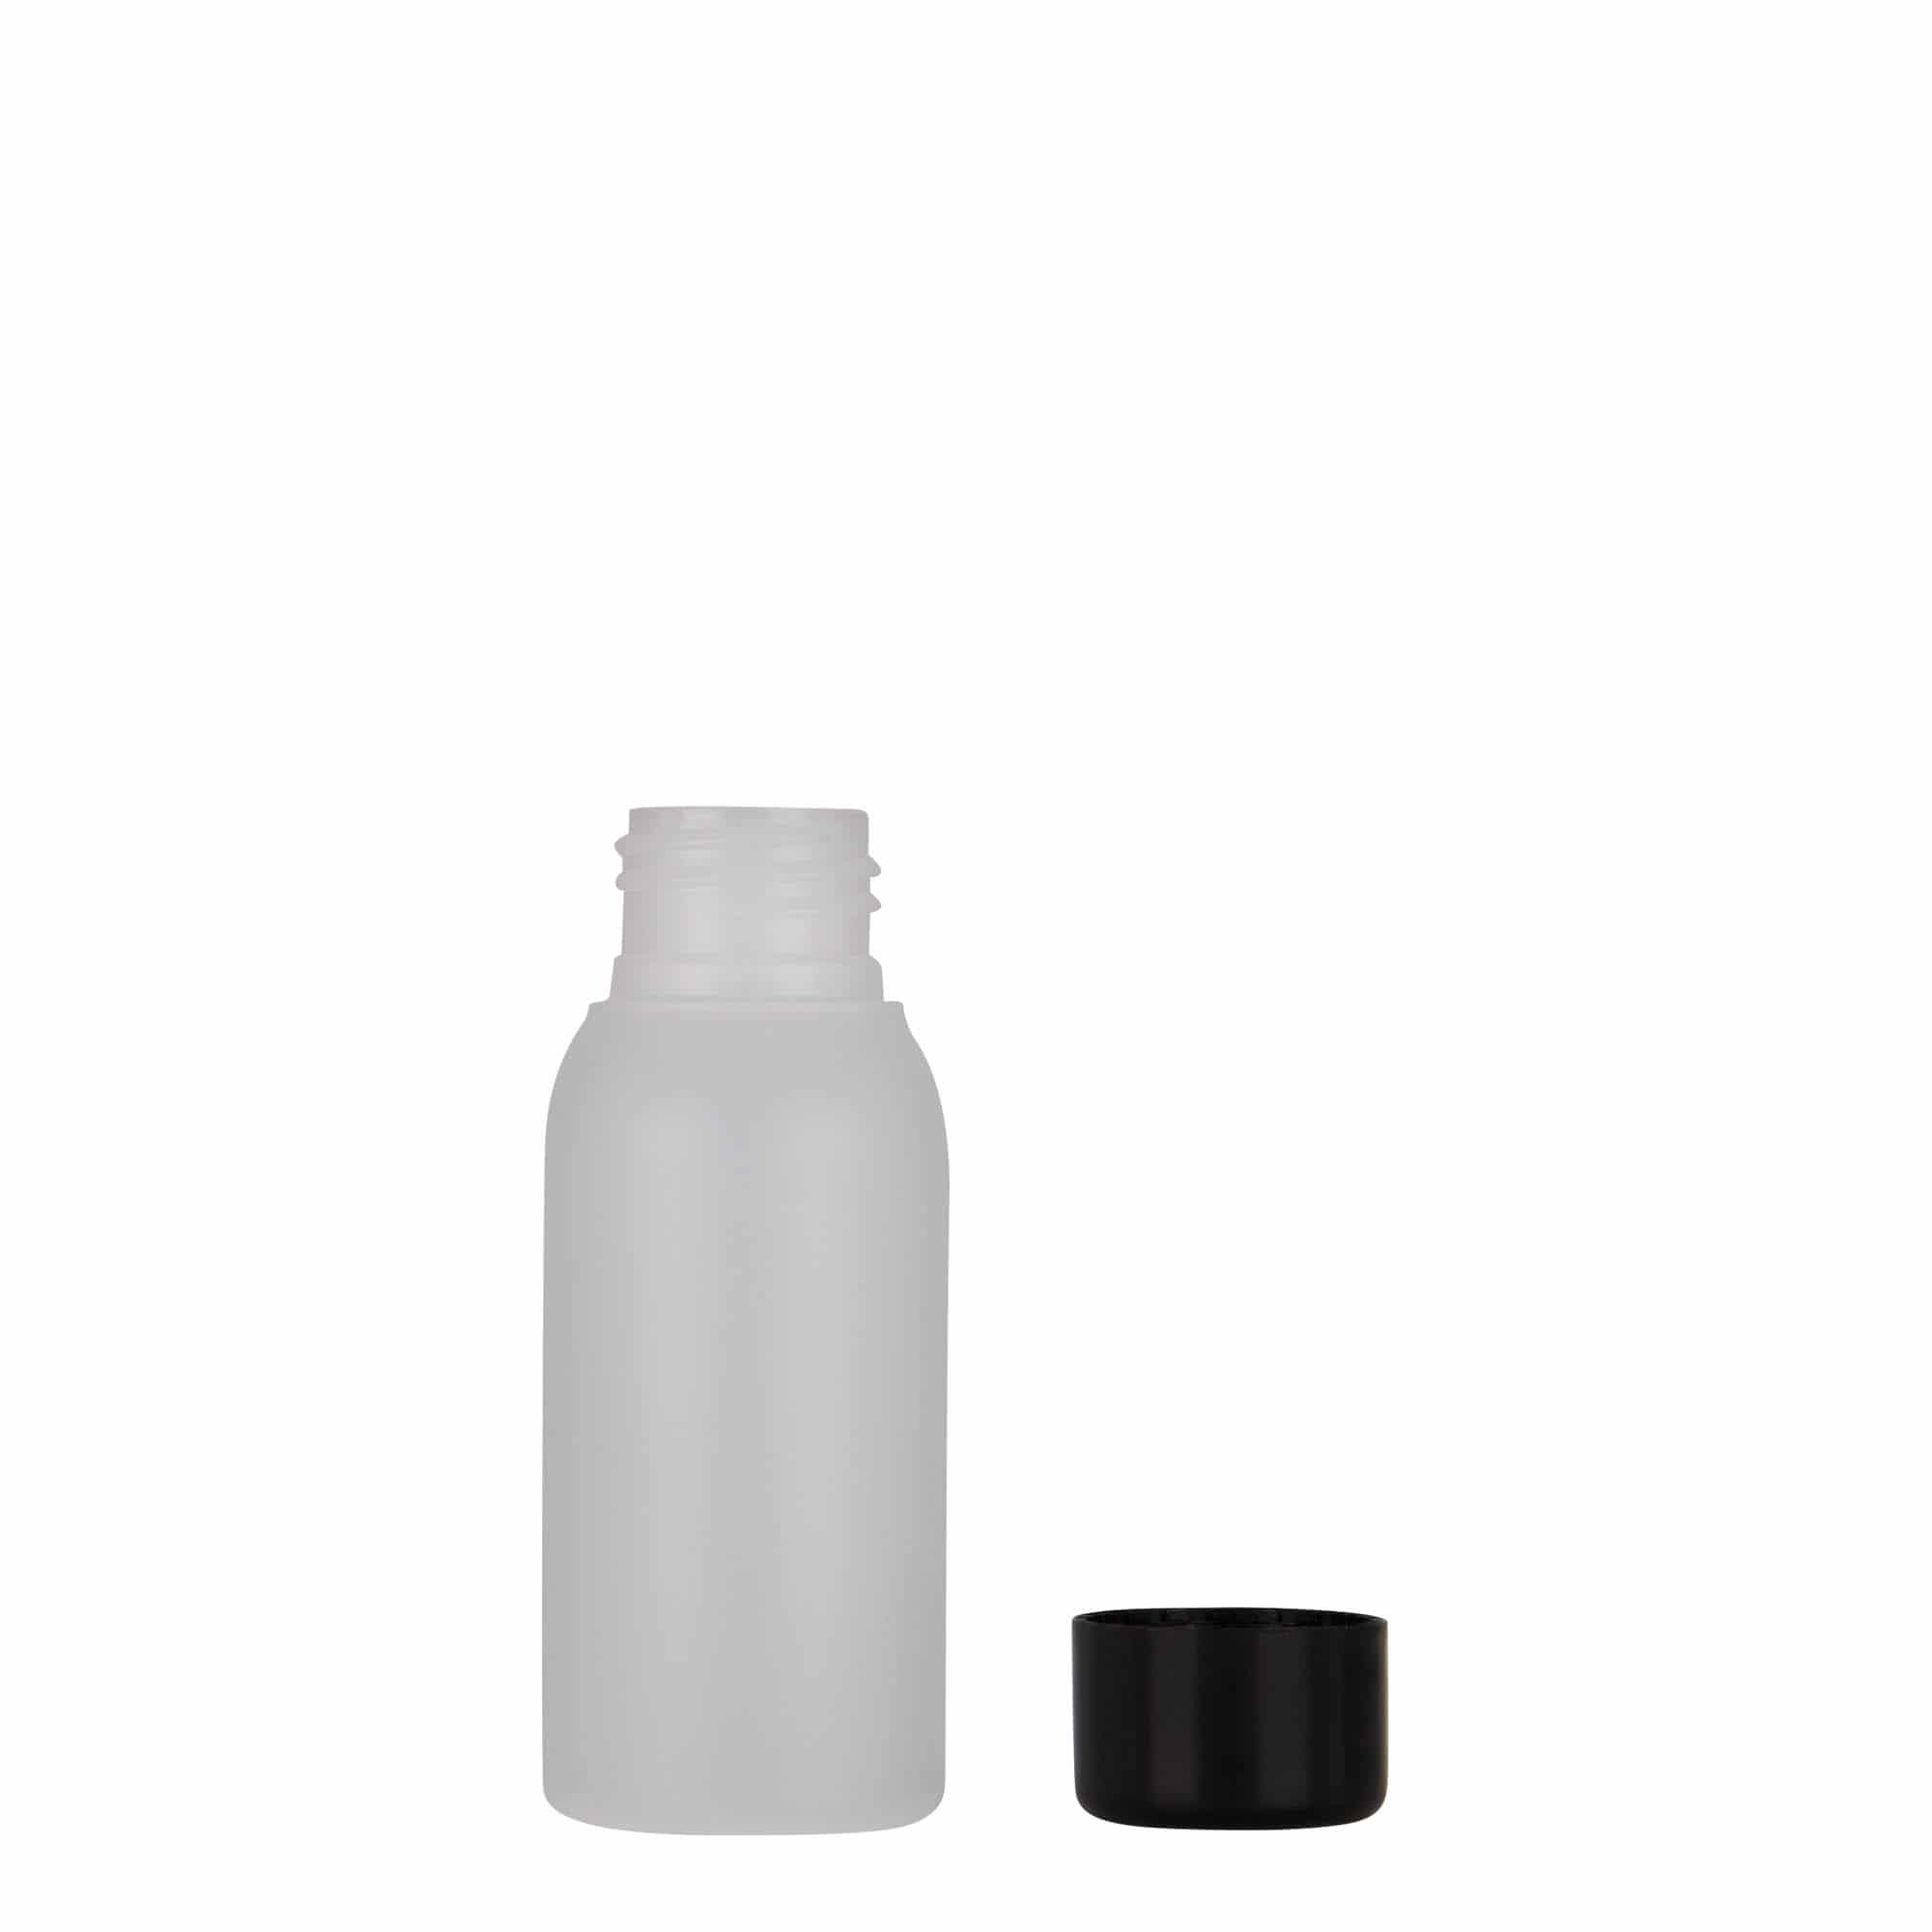 50 ml plastic bottle 'Tuffy', HDPE, natural, closure: GPI 24/410